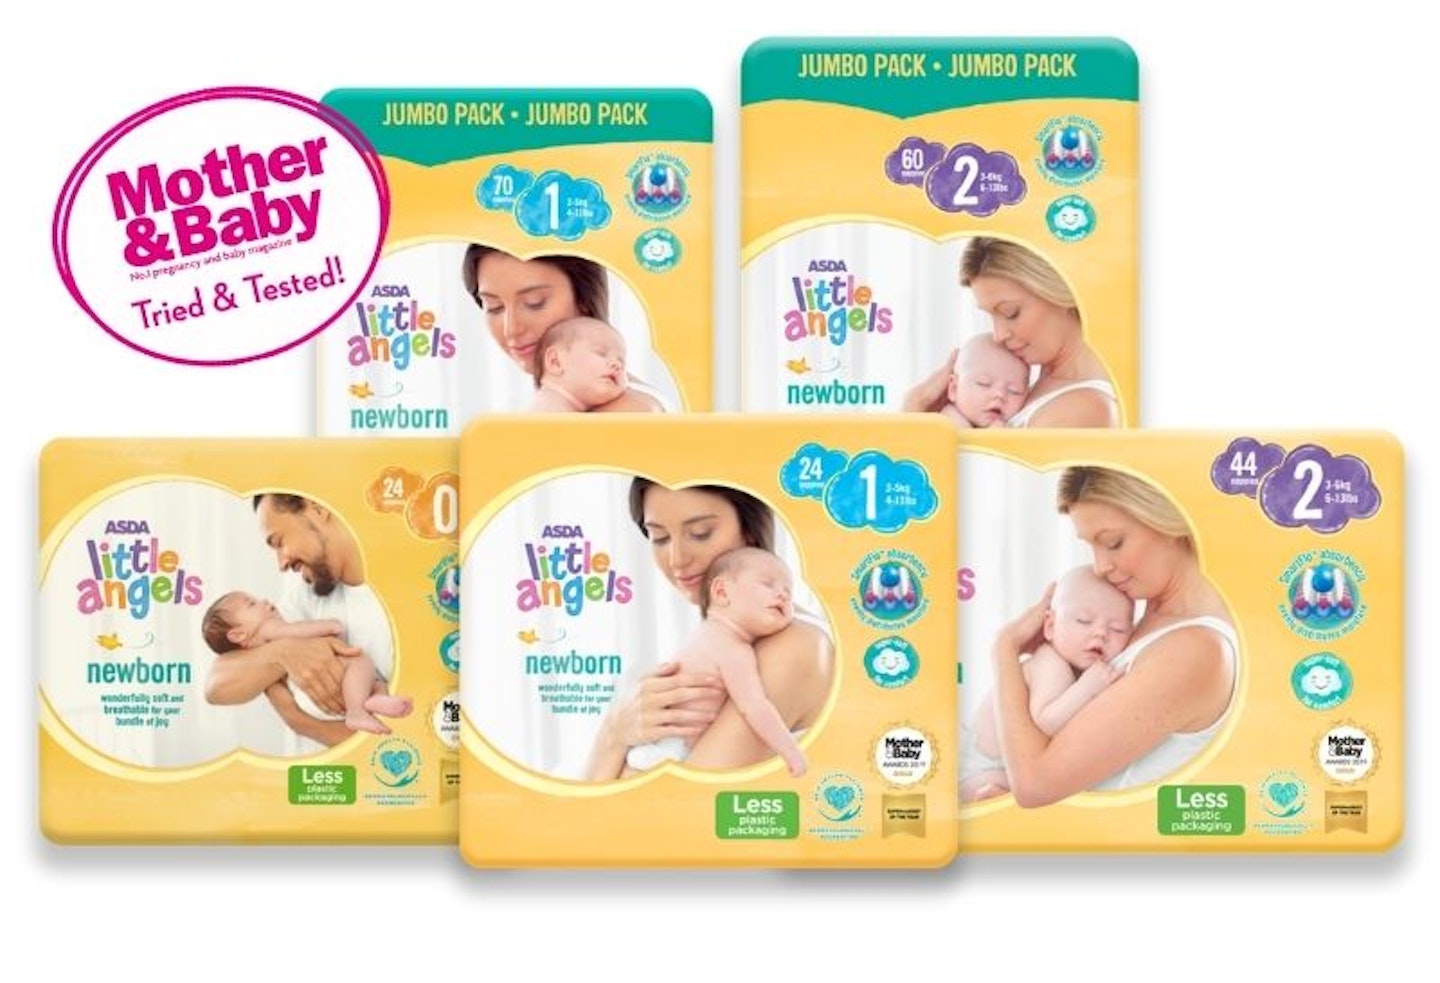 ASDA Litte Angels Newborn nappies